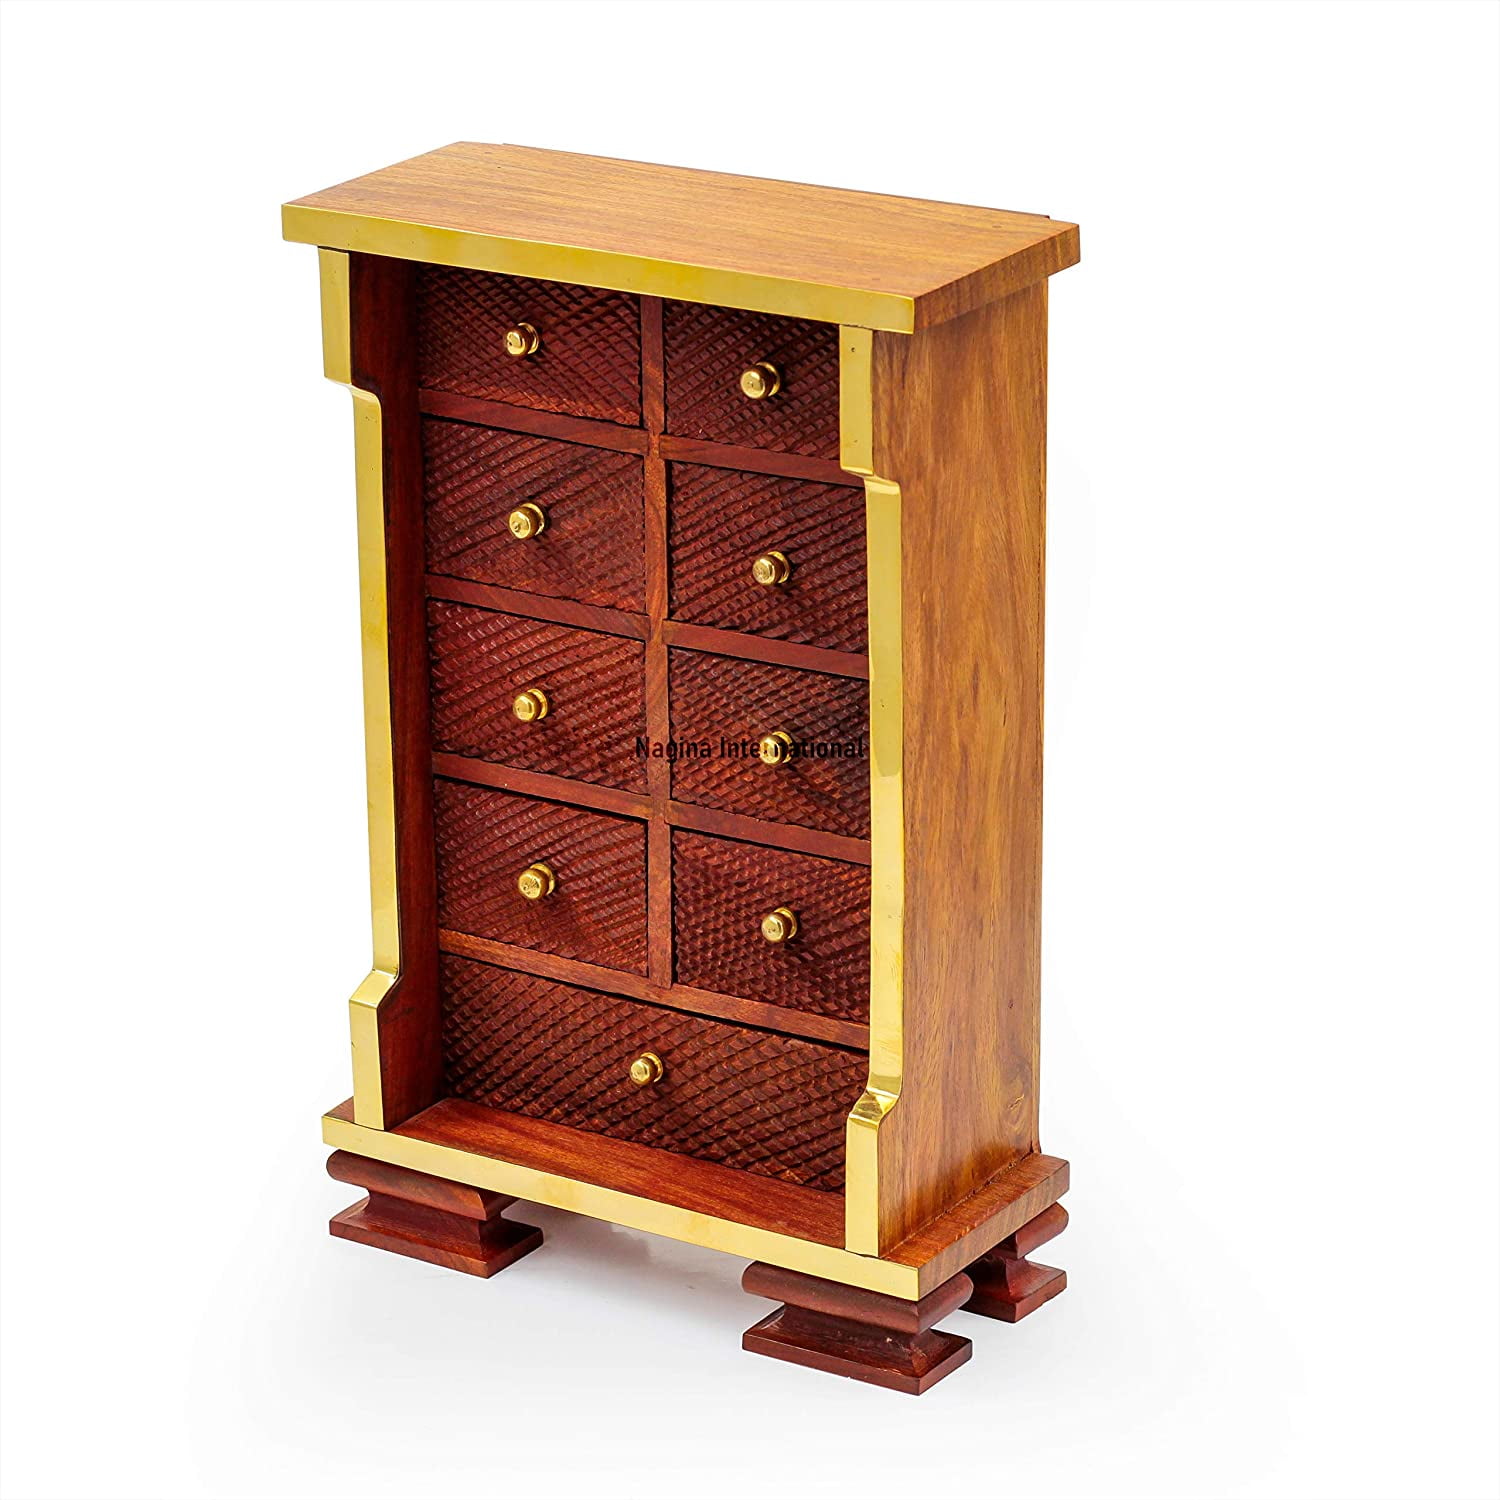 Nagina International 11 Wooden Crafted Multi Drawer Almirah Premium Wood Craft Decor Gifts Functional Tiny Cupboard fe7071bf 2cba 437a 9a3a b35be9856bdf.e5913bb62c9336b4a7c8ce455e42c3ba